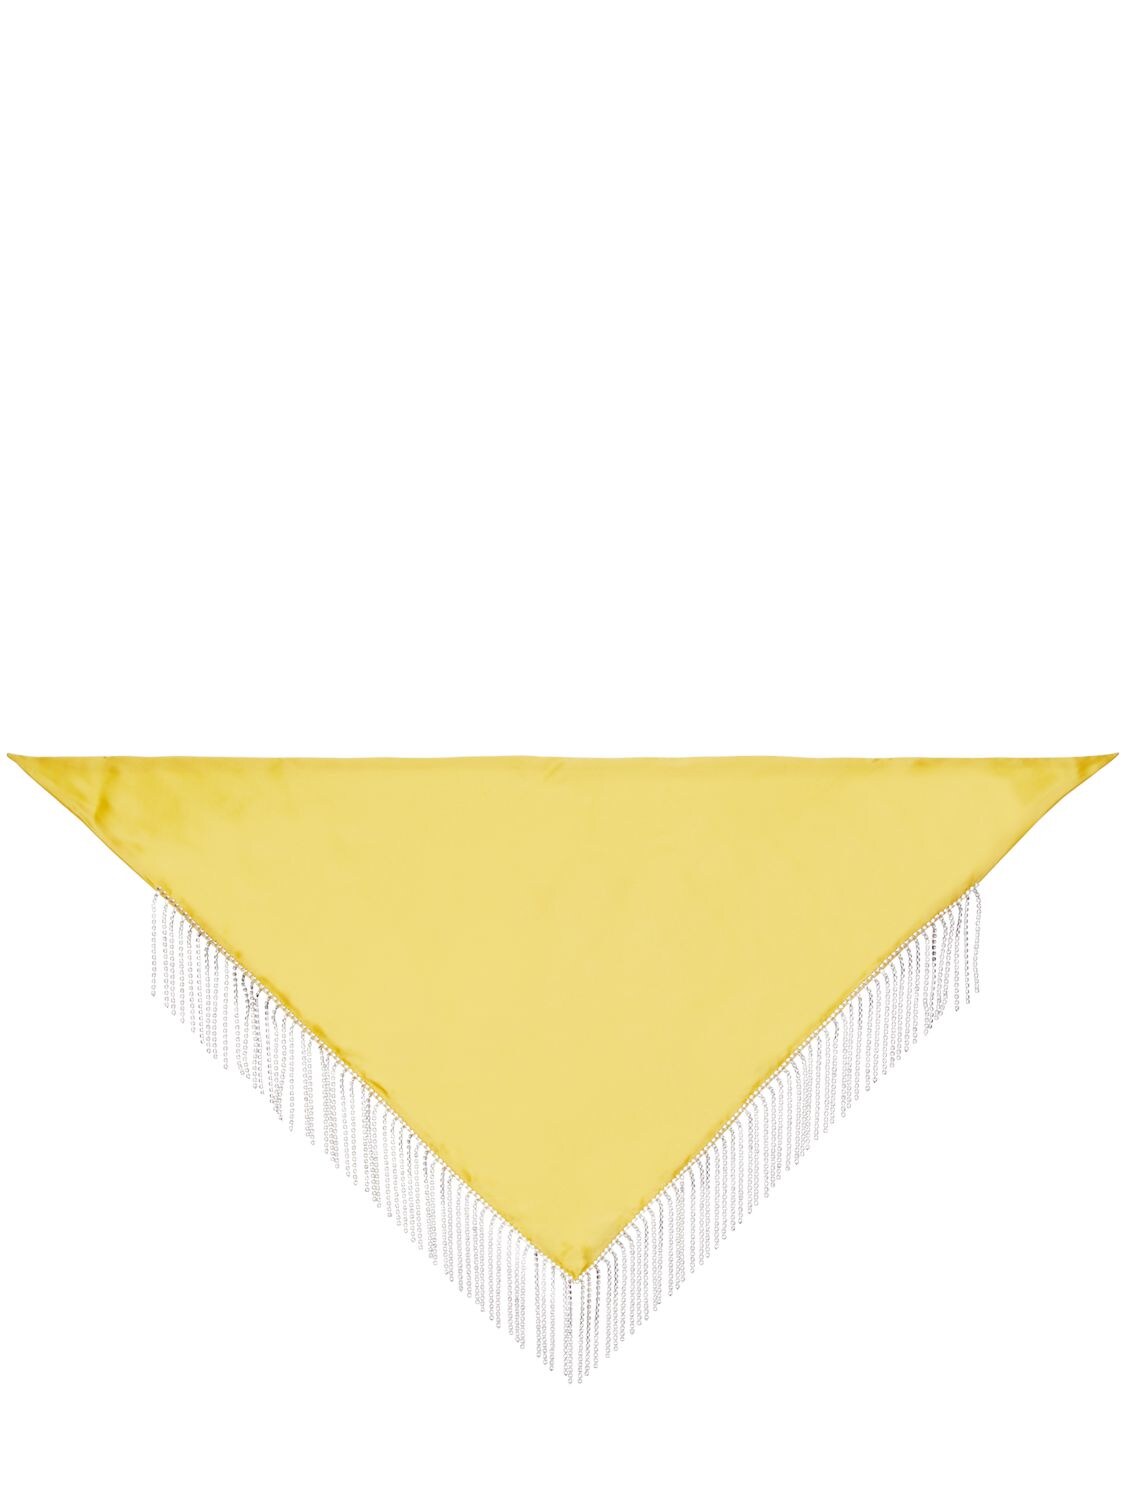 Les Inconnus Jimi Embellished Silk Satin Bandana In Light Yellow